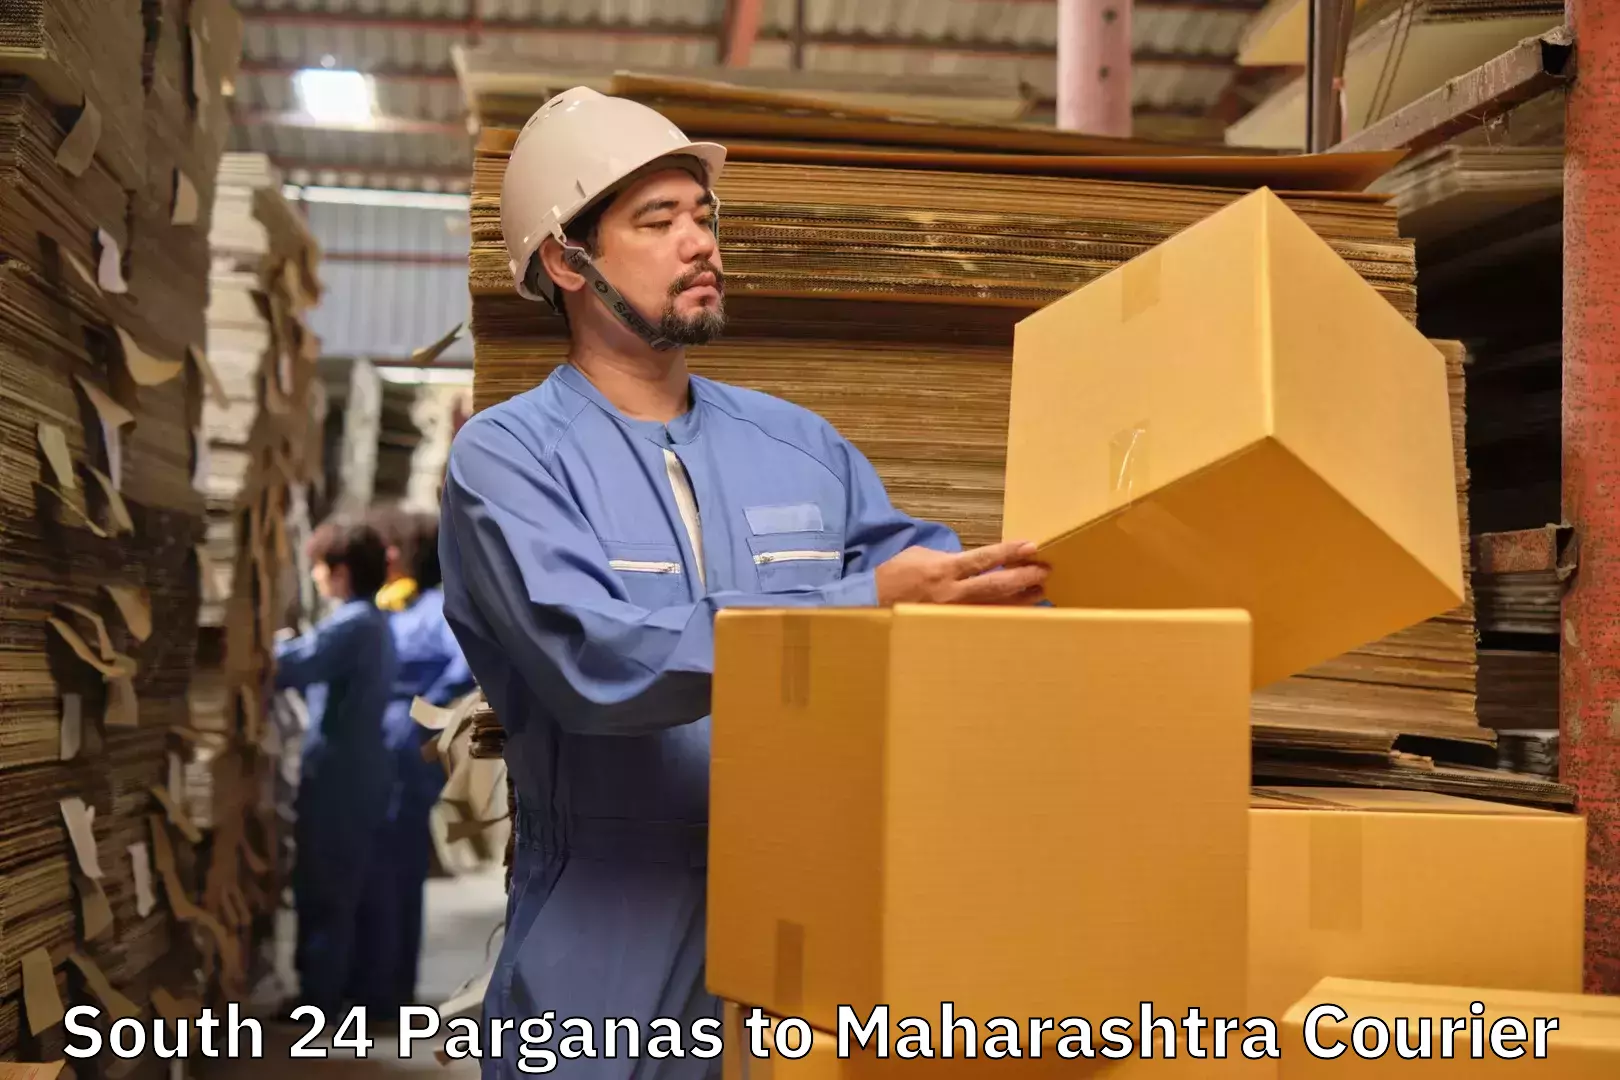 Baggage relocation service South 24 Parganas to Maharashtra